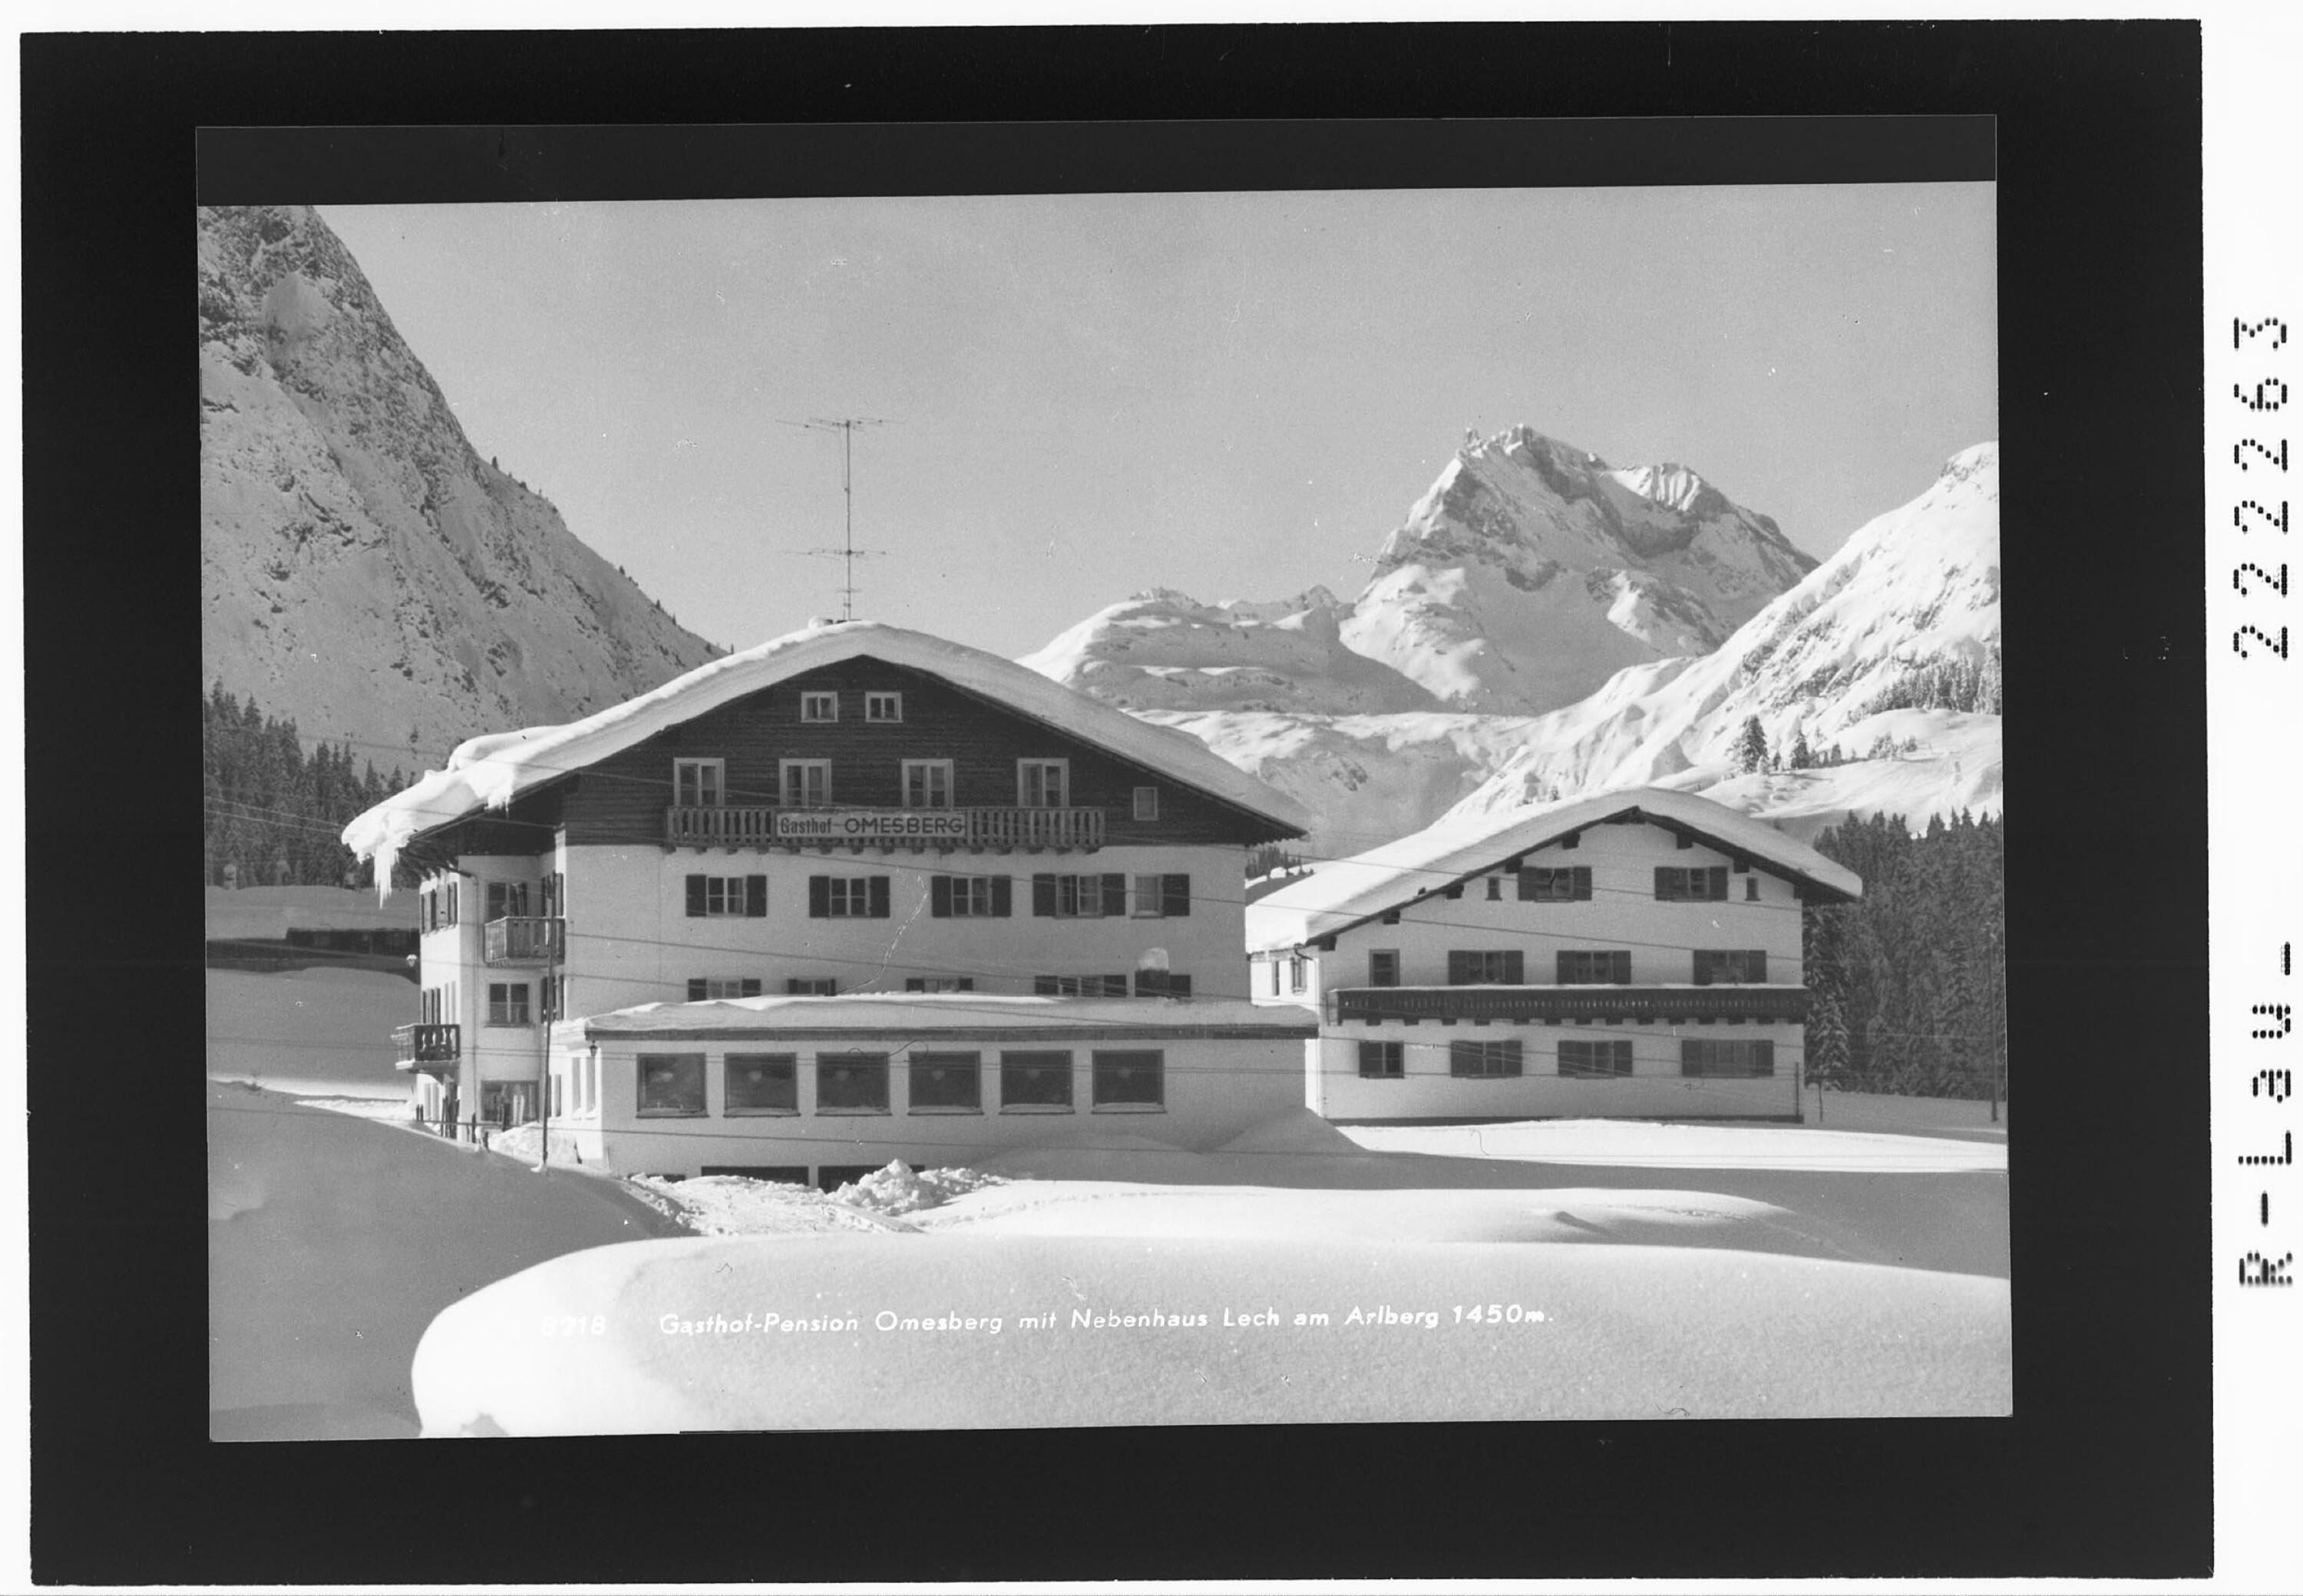 Gasthof - Pension Omesberg mit Nebenhaus / Lech am Arlberg 1450 m></div>


    <hr>
    <div class=